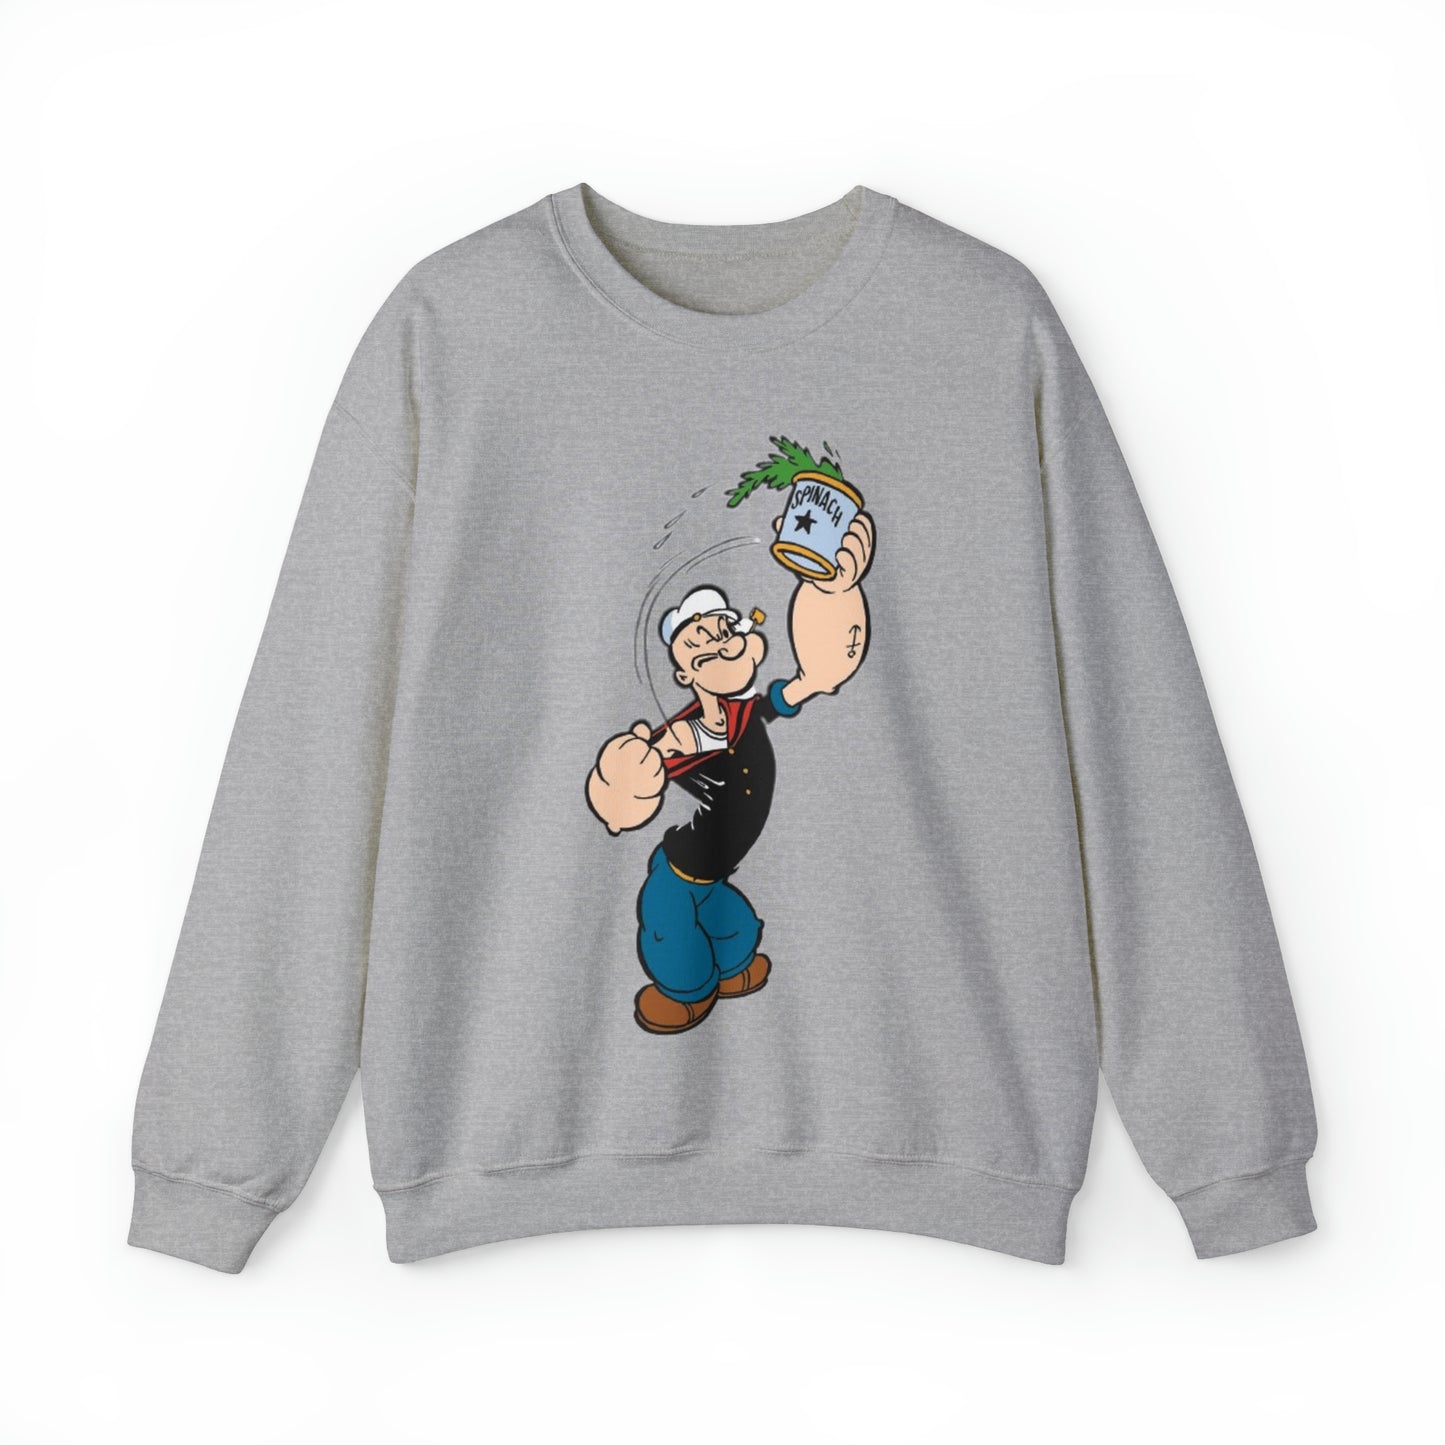 Popeye Spinach Sweatshirt